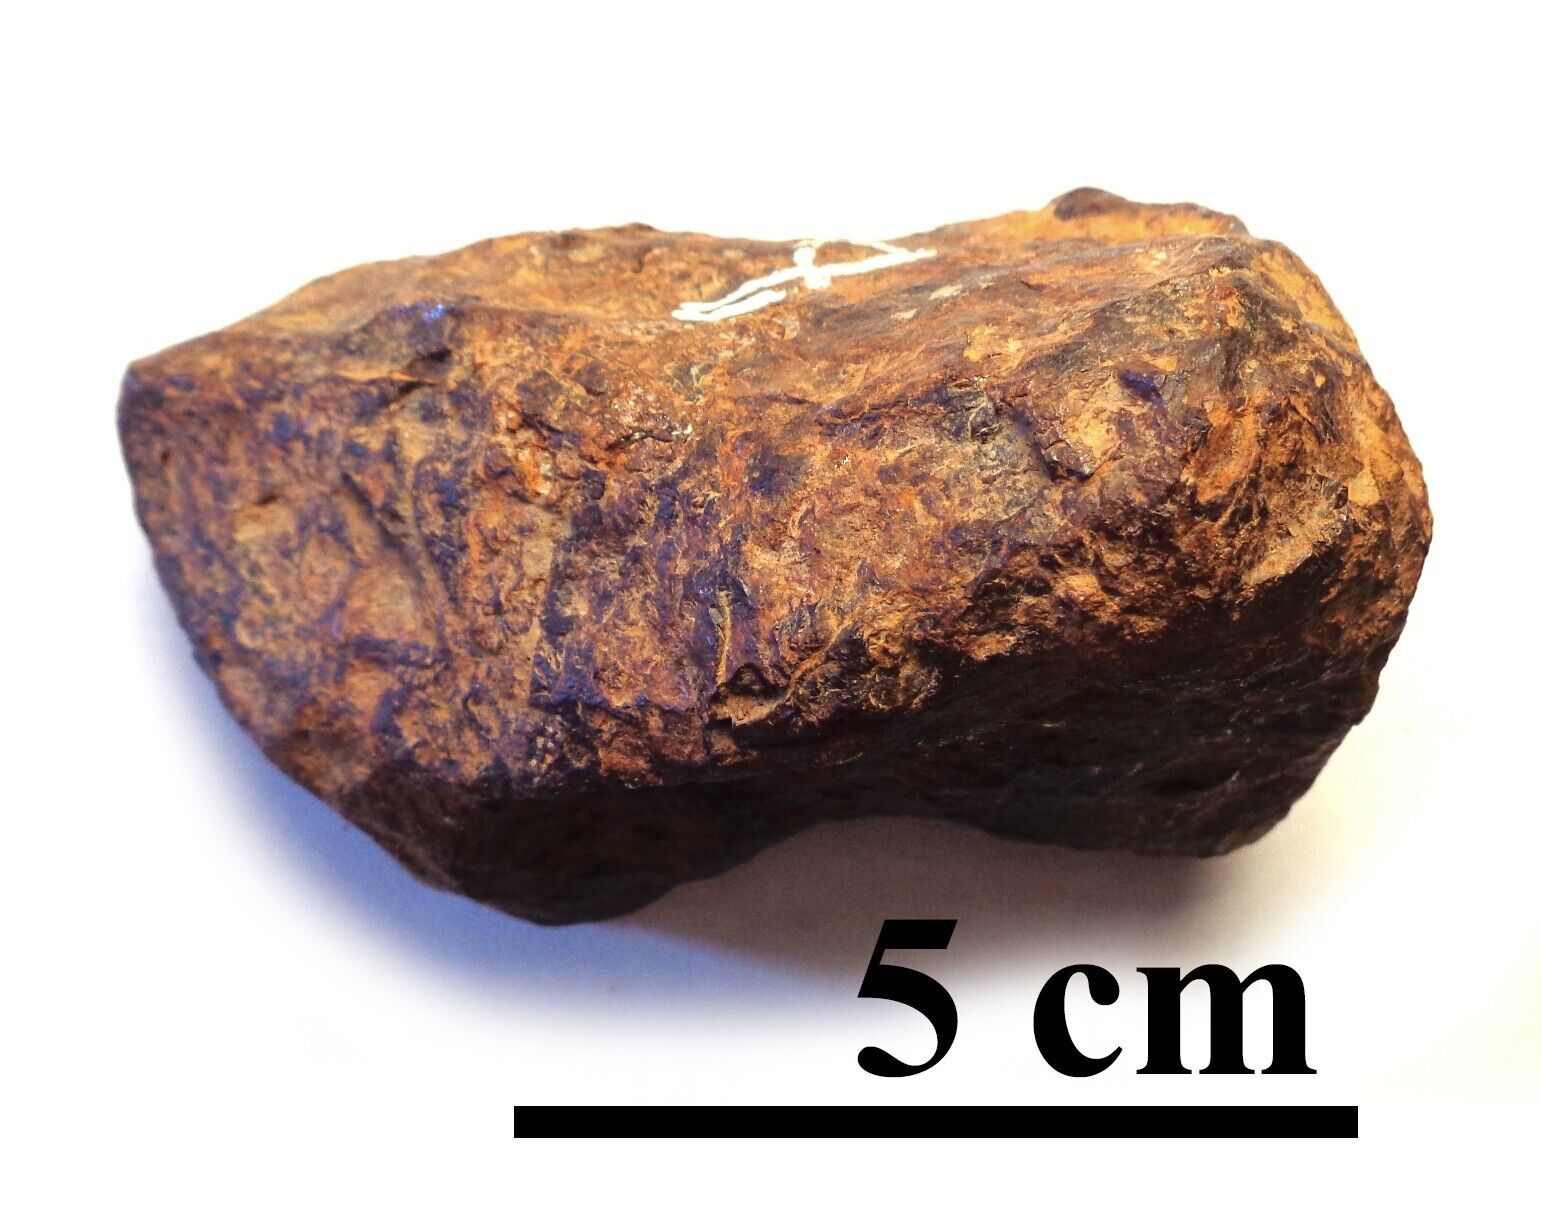 Meteorite Seymchan complete piece that contain olivines, 630 grams